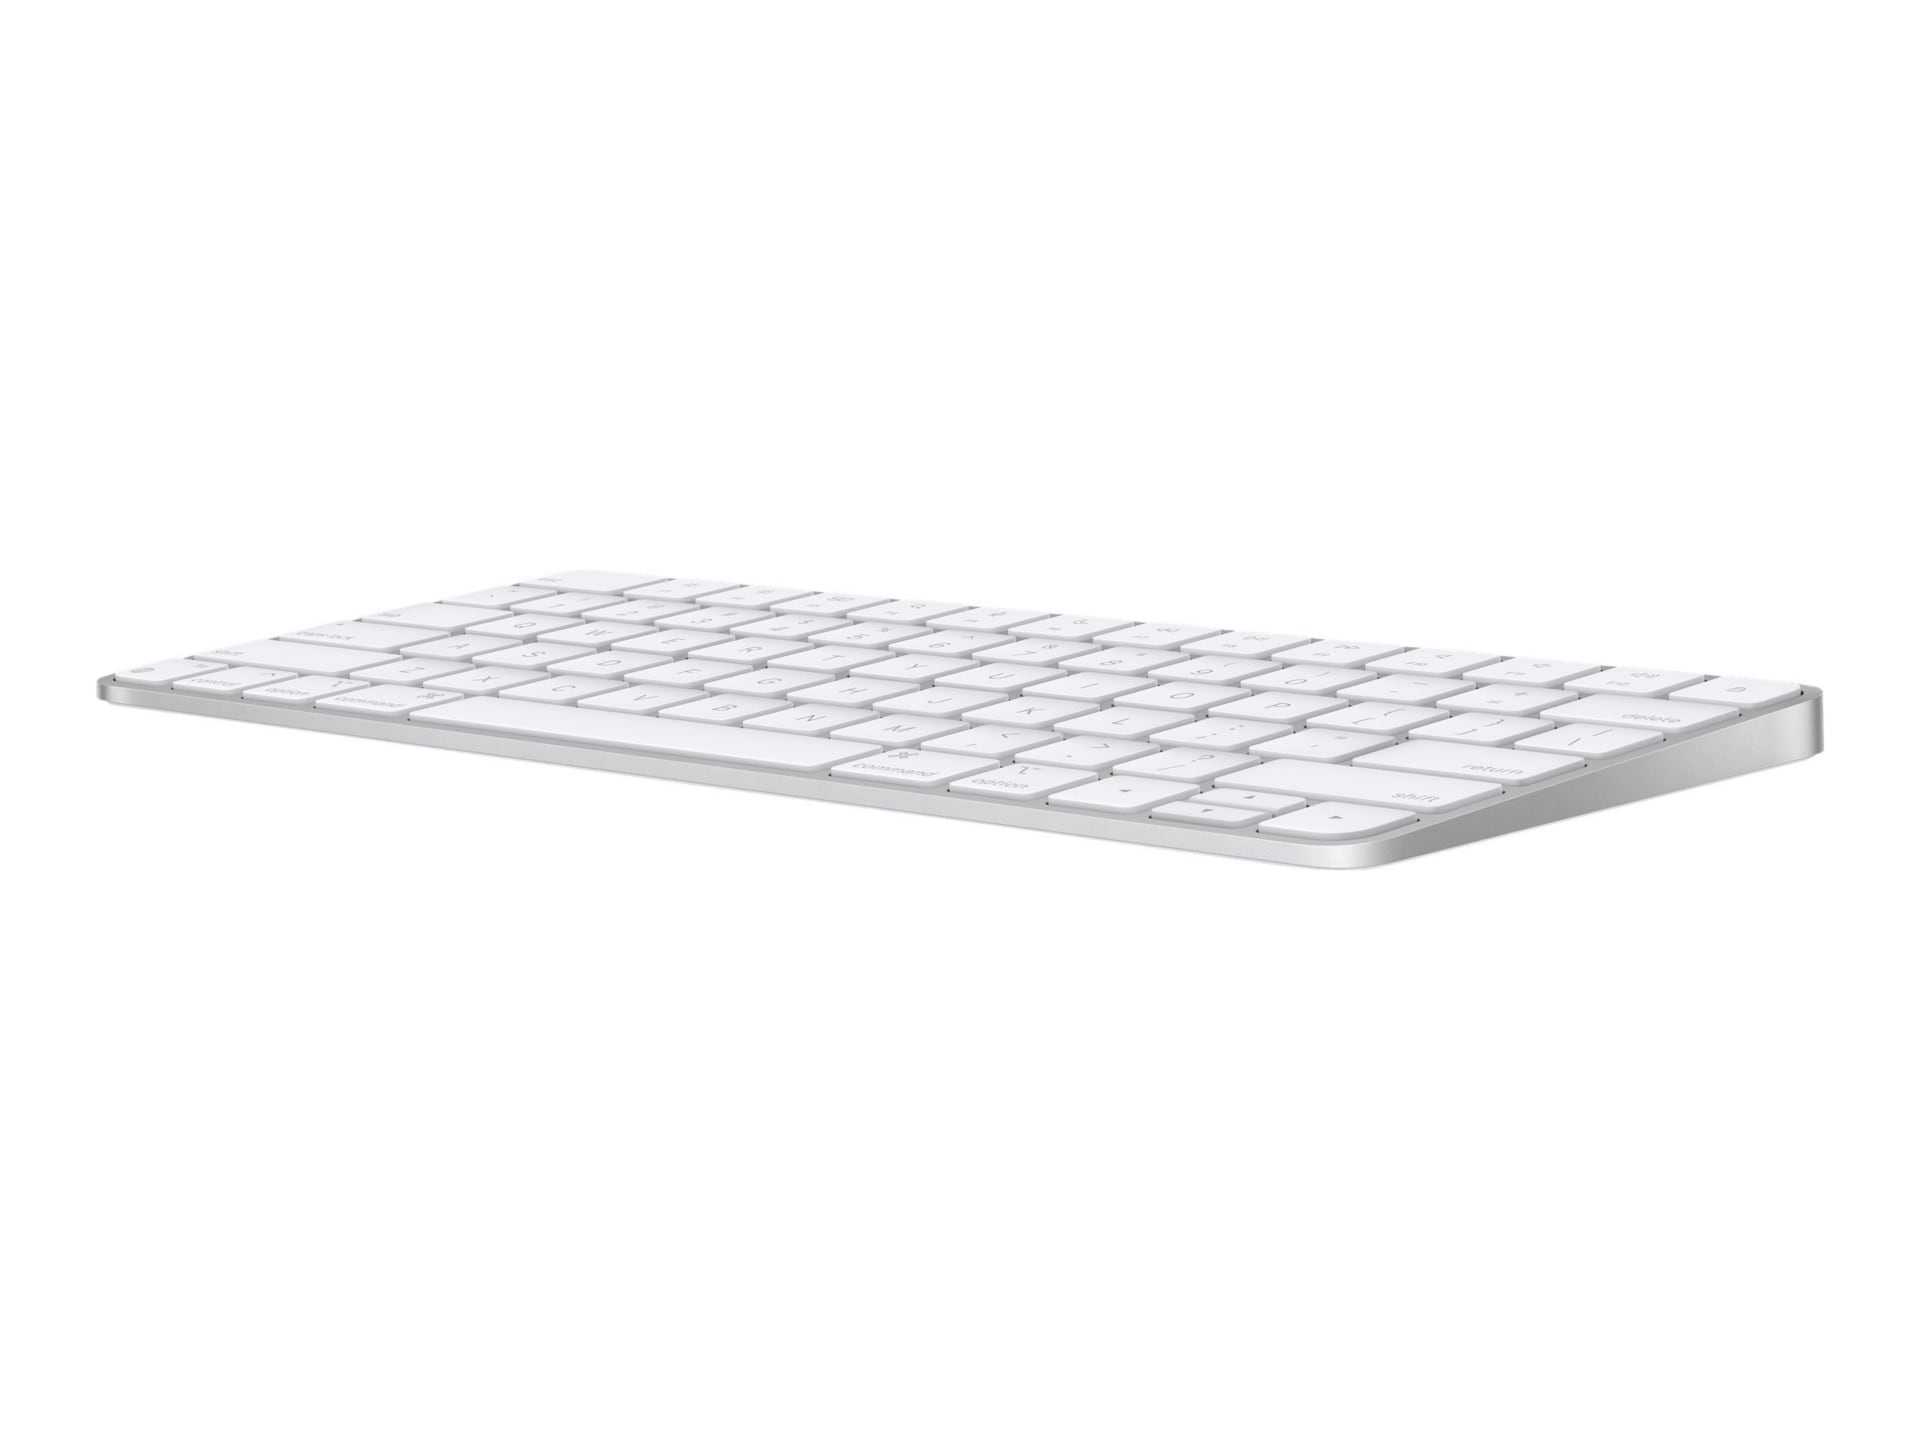 Mew Mew extract vat Apple Magic Keyboard - keyboard - QWERTY - US - MK2A3LL/A - Keyboards -  CDW.com